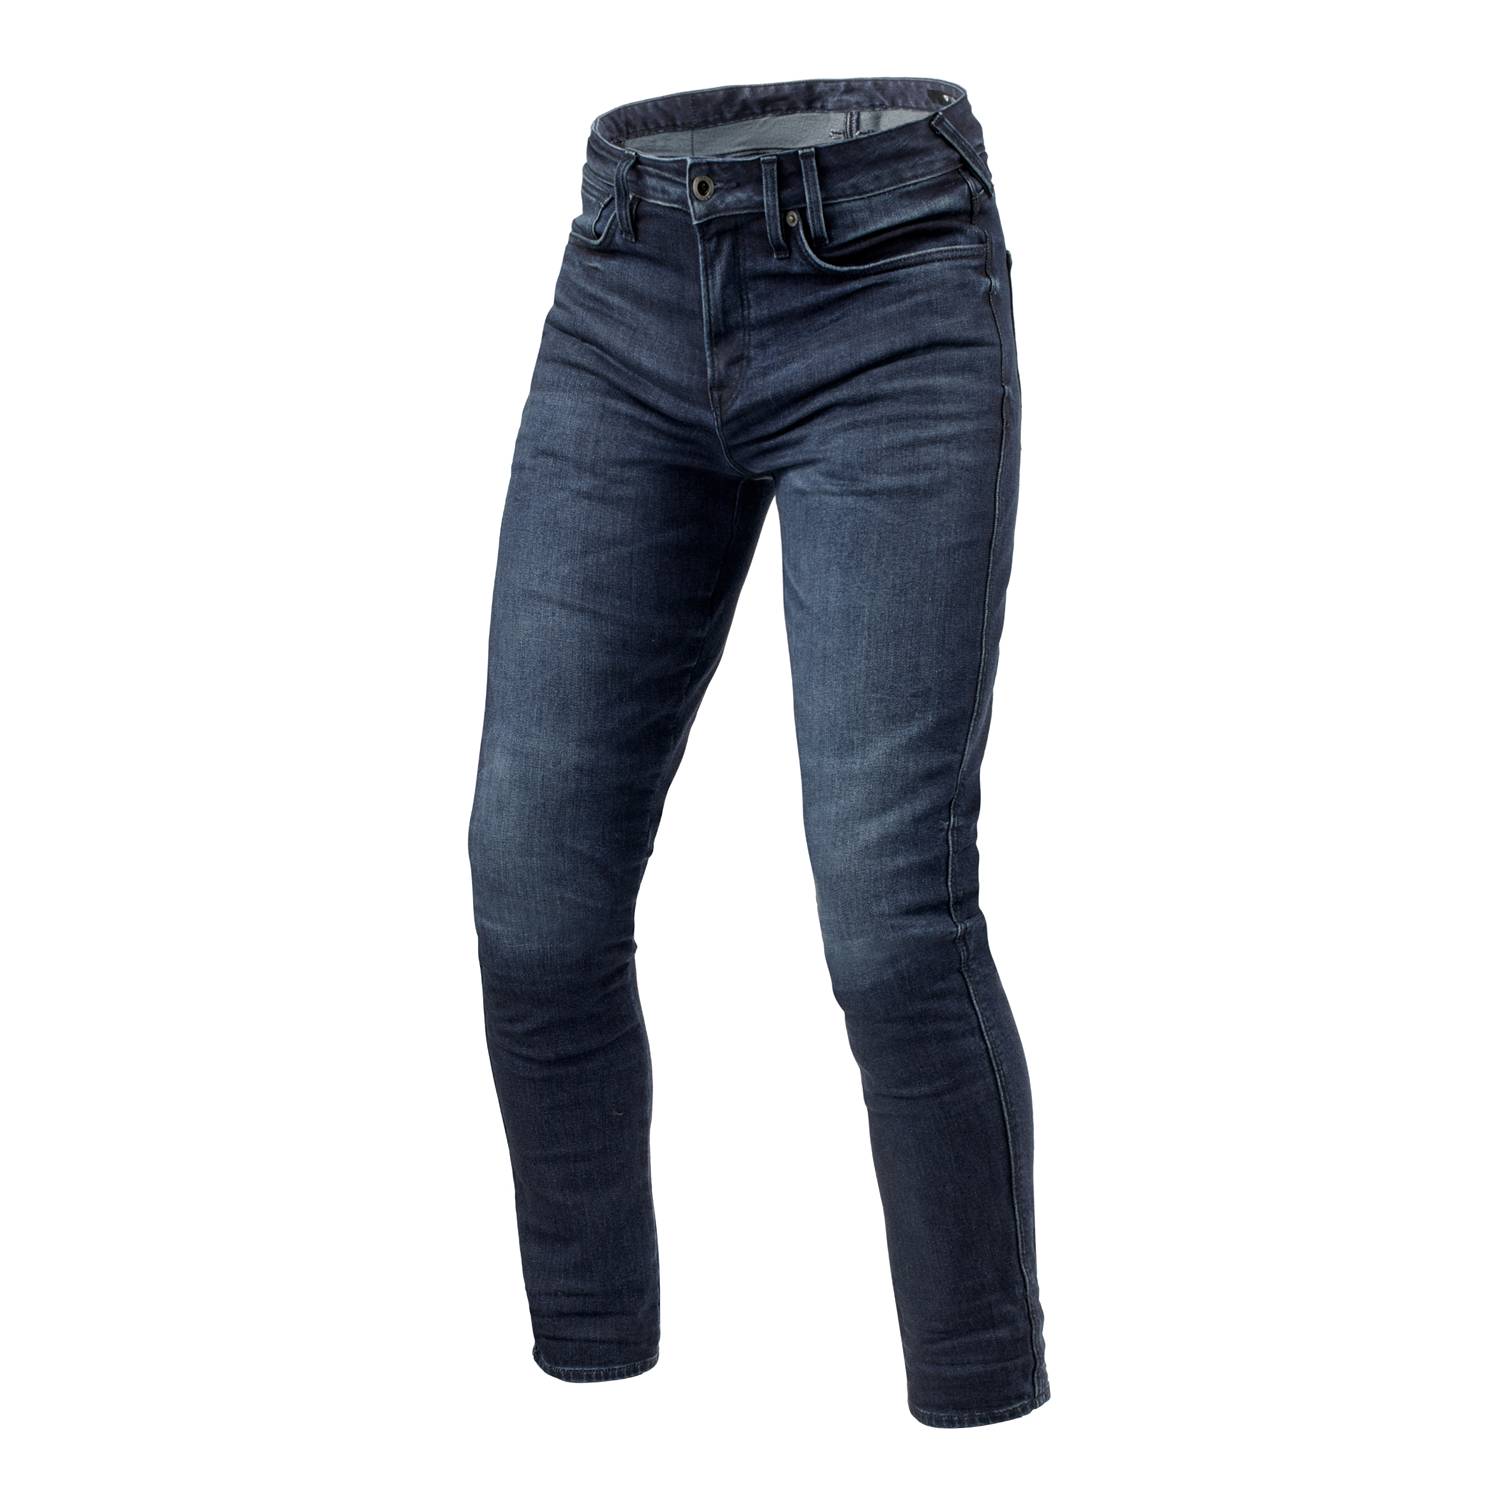 Image of REV'IT! Jeans Carlin SK Dark Blue Used L36 Motorcycle Jeans Größe L36/W34